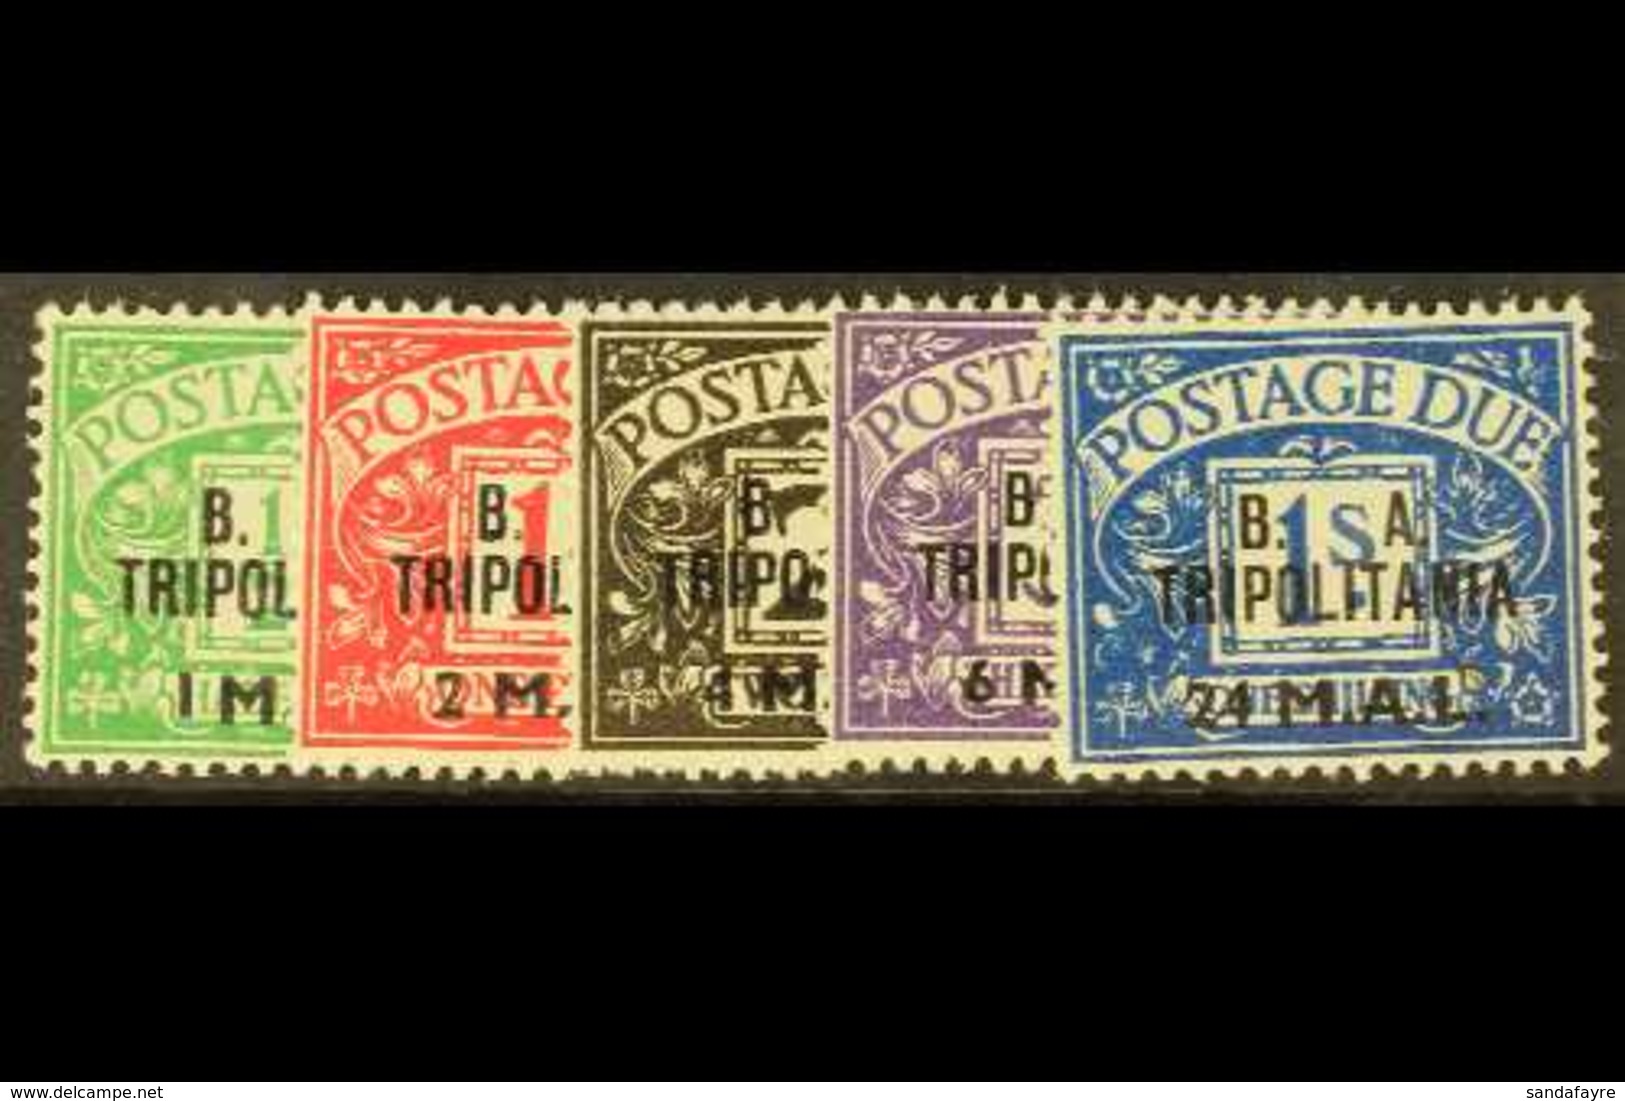 TRIPOLITANIA POSTAGE DUES 1950 B.A. Surch Set Complete, SG TD6/10, Very Fine Mint. (5 Stamps) For More Images, Please Vi - Afrique Orientale Italienne